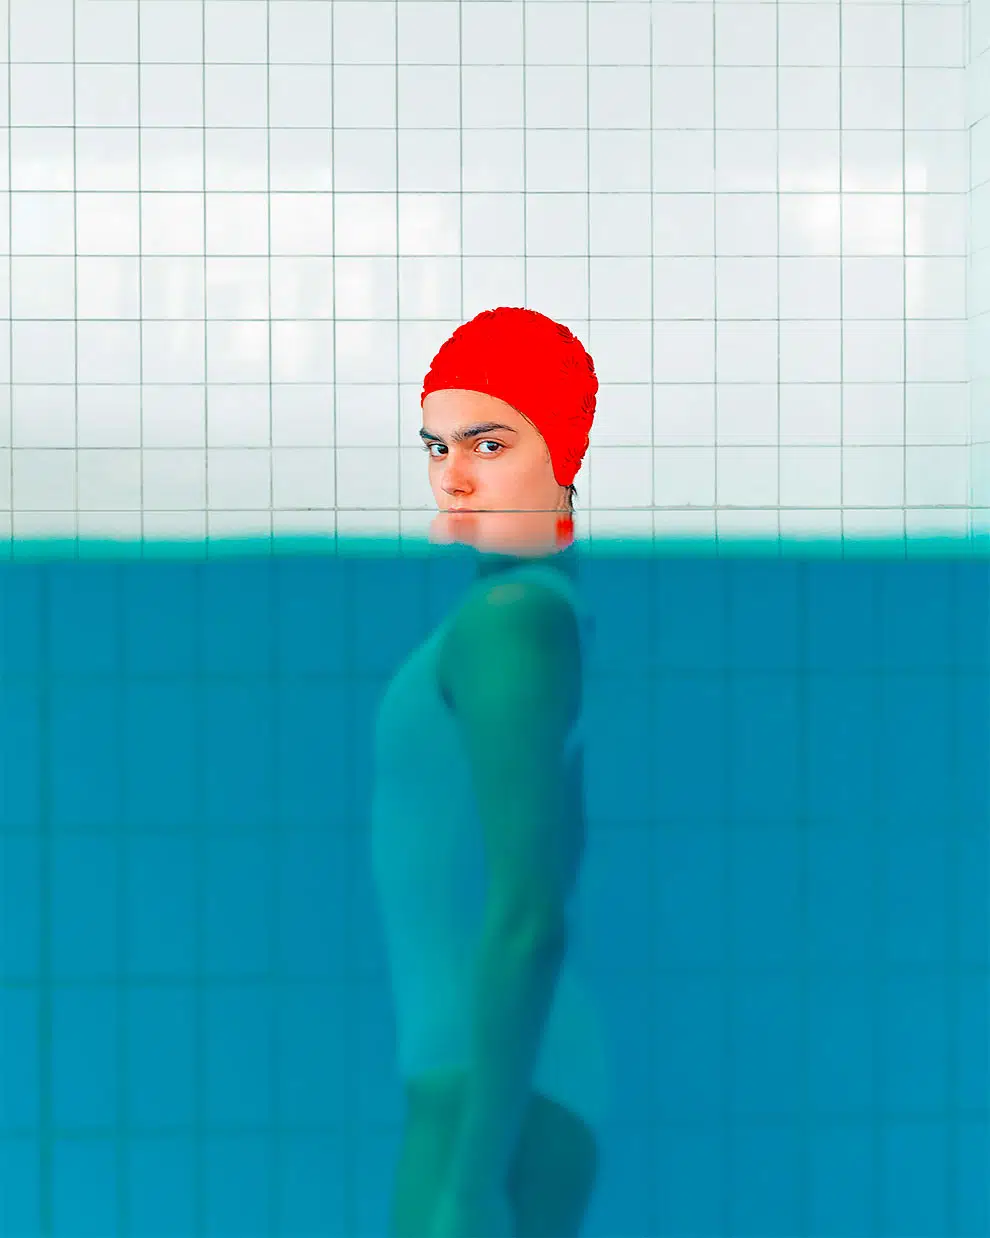 Mária Švarbová swiming pool red